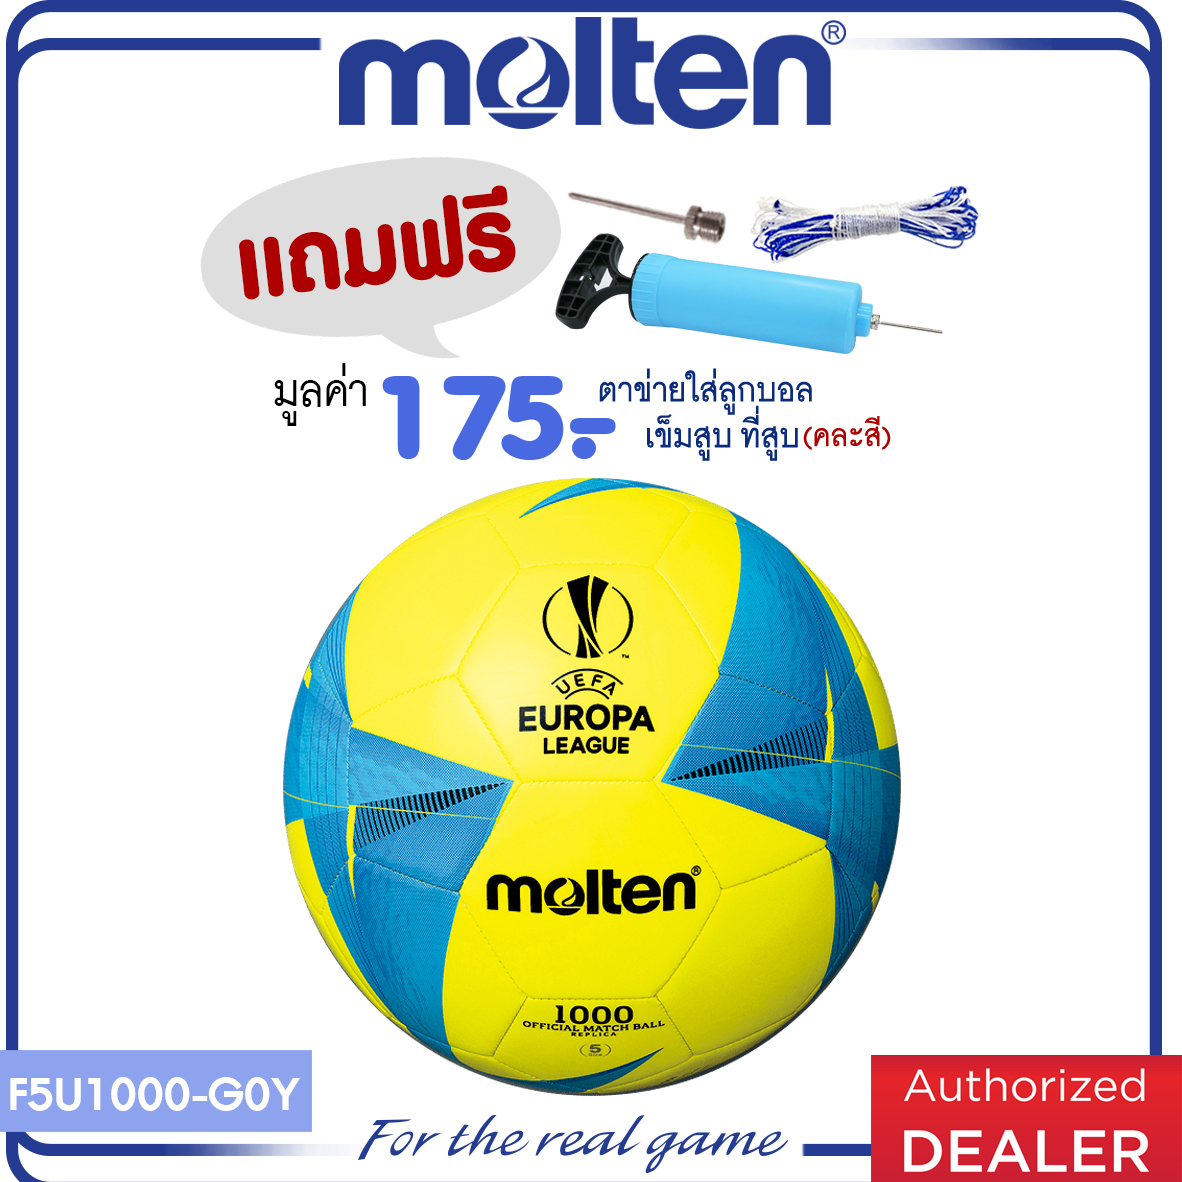 Molten ลูกฟุตบอลหนังเย็บ MOT Football MST TPU pk  F5U1000-G0 / F5U1000-G0Y / F5U1000-G0O (460) SIZE 5 (460) [มี 3 สี] (แถมฟรี ตาข่ายใส่ลูกบอล+เข็บสูบ+ที่สูบลม)